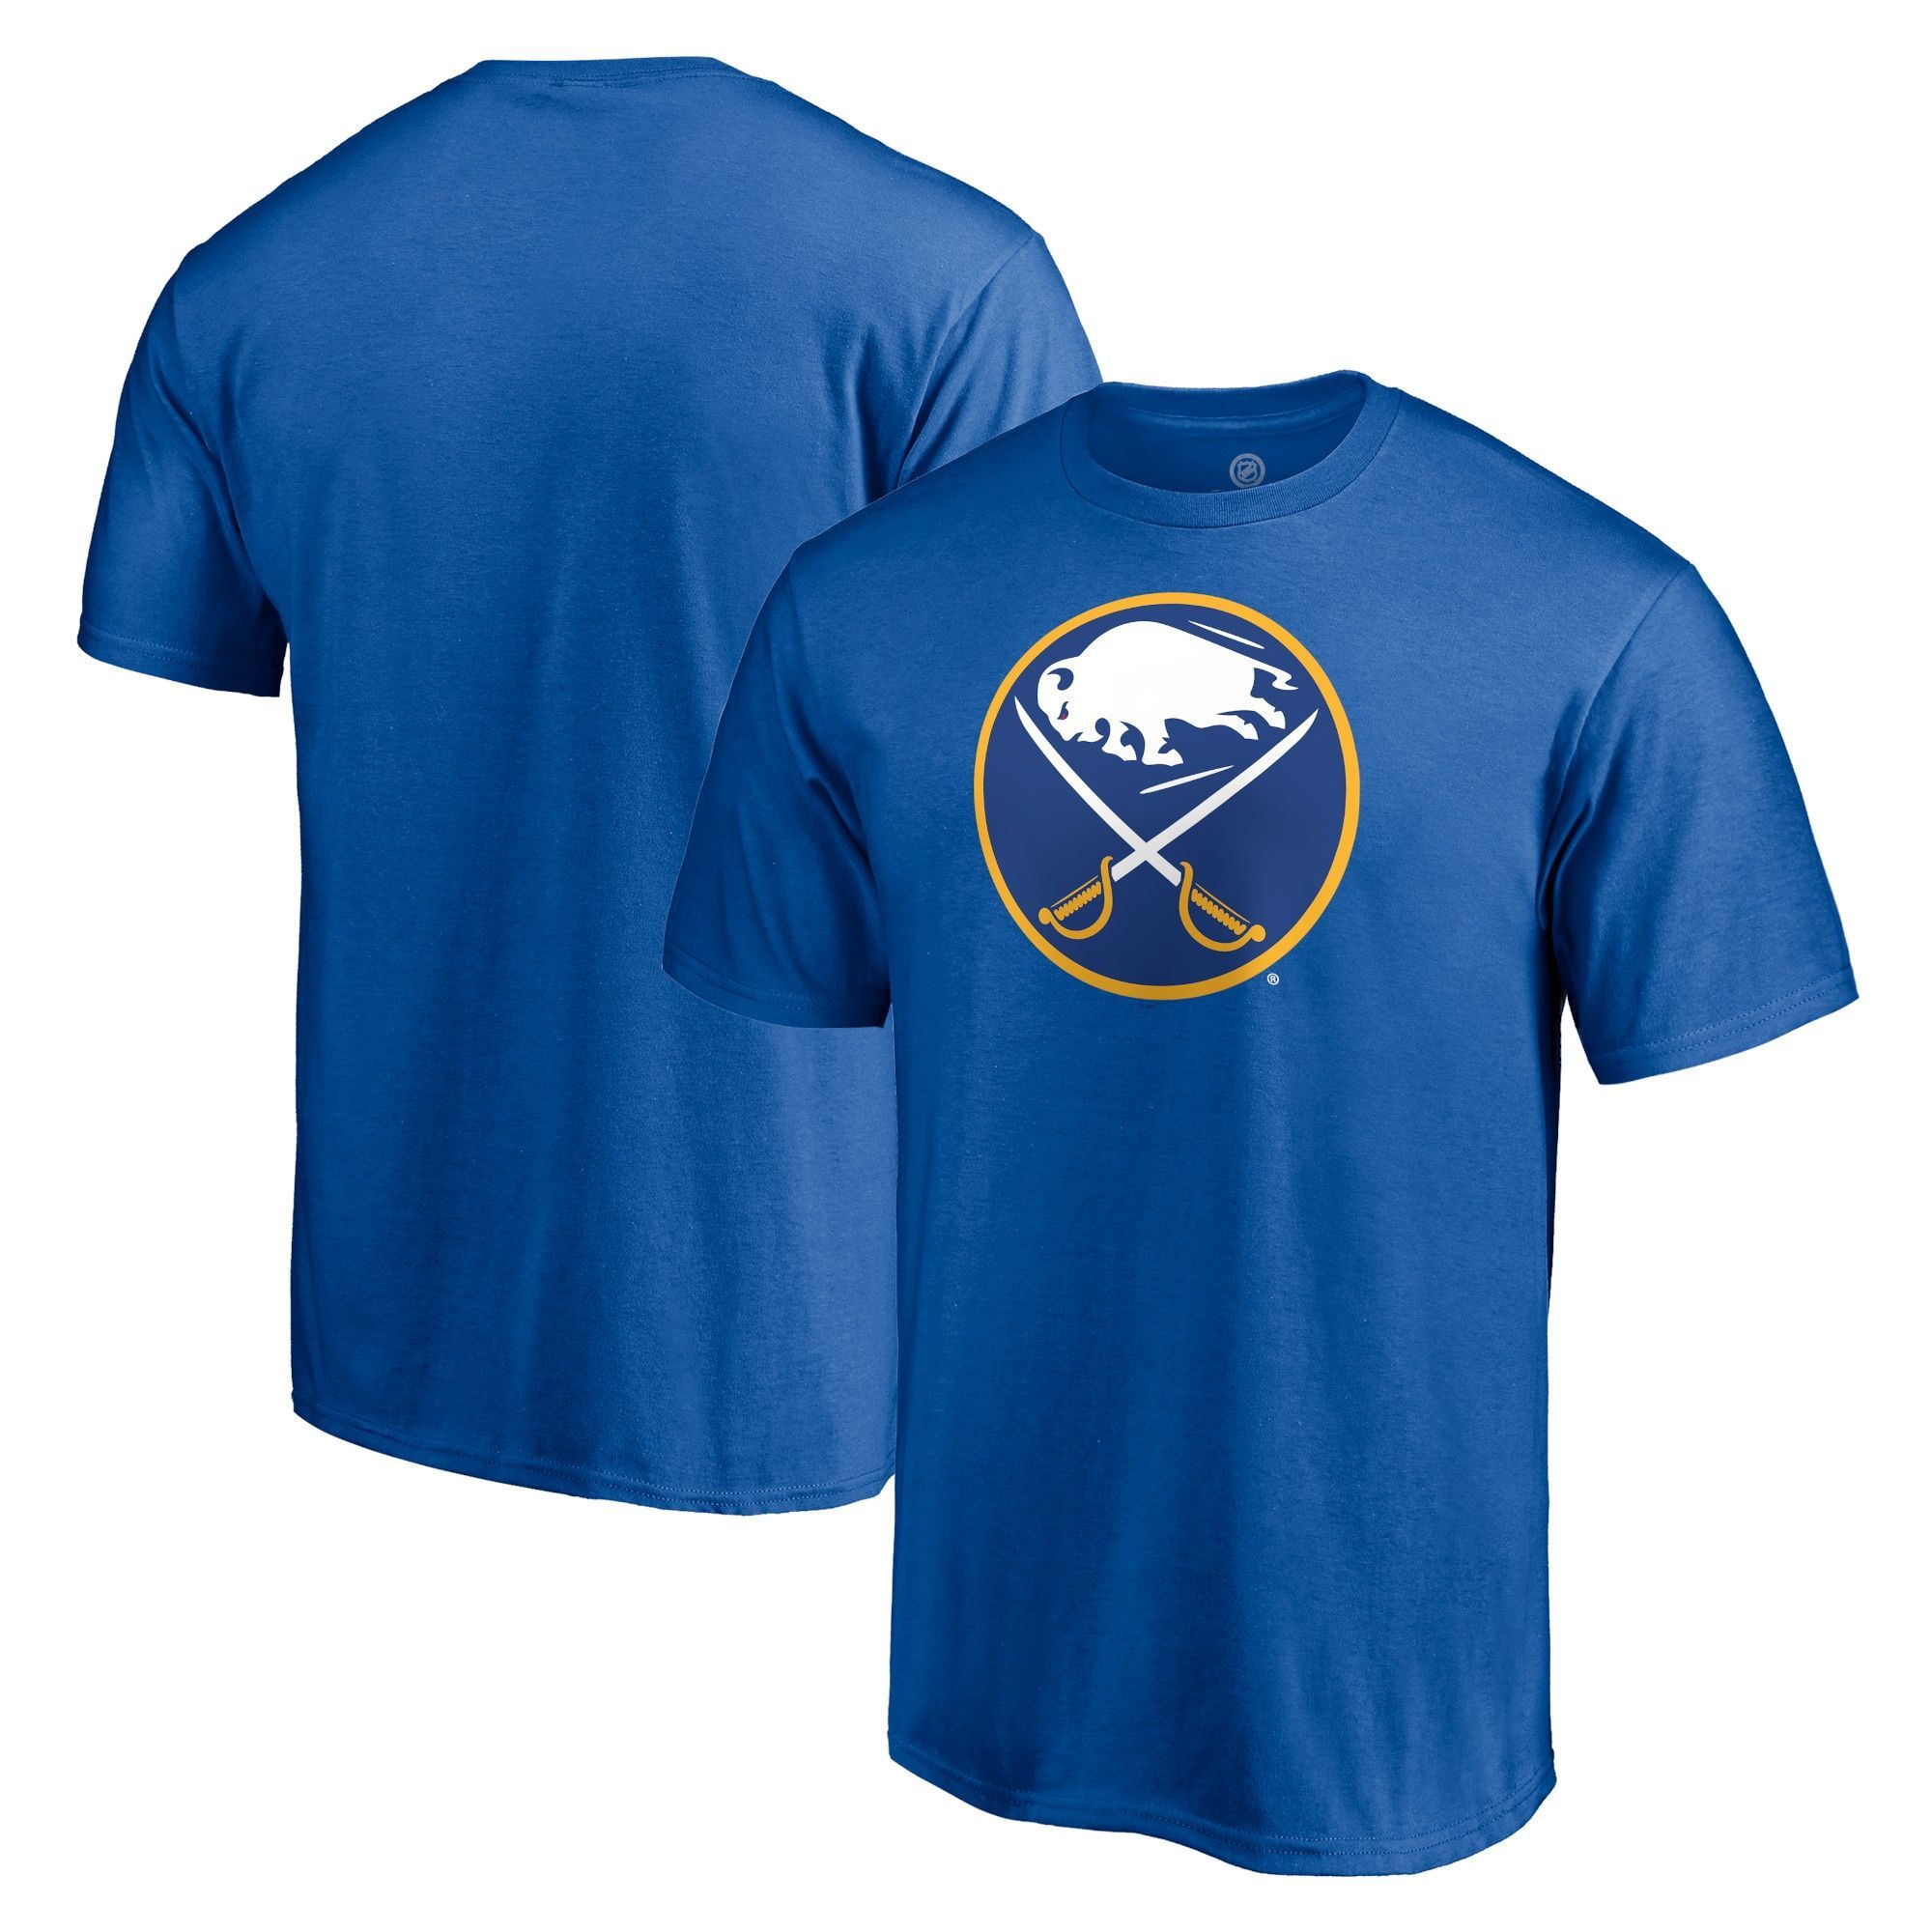 Men's Fanatics Branded Royal Buffalo Sabres Primary Team Logo T-Shirt